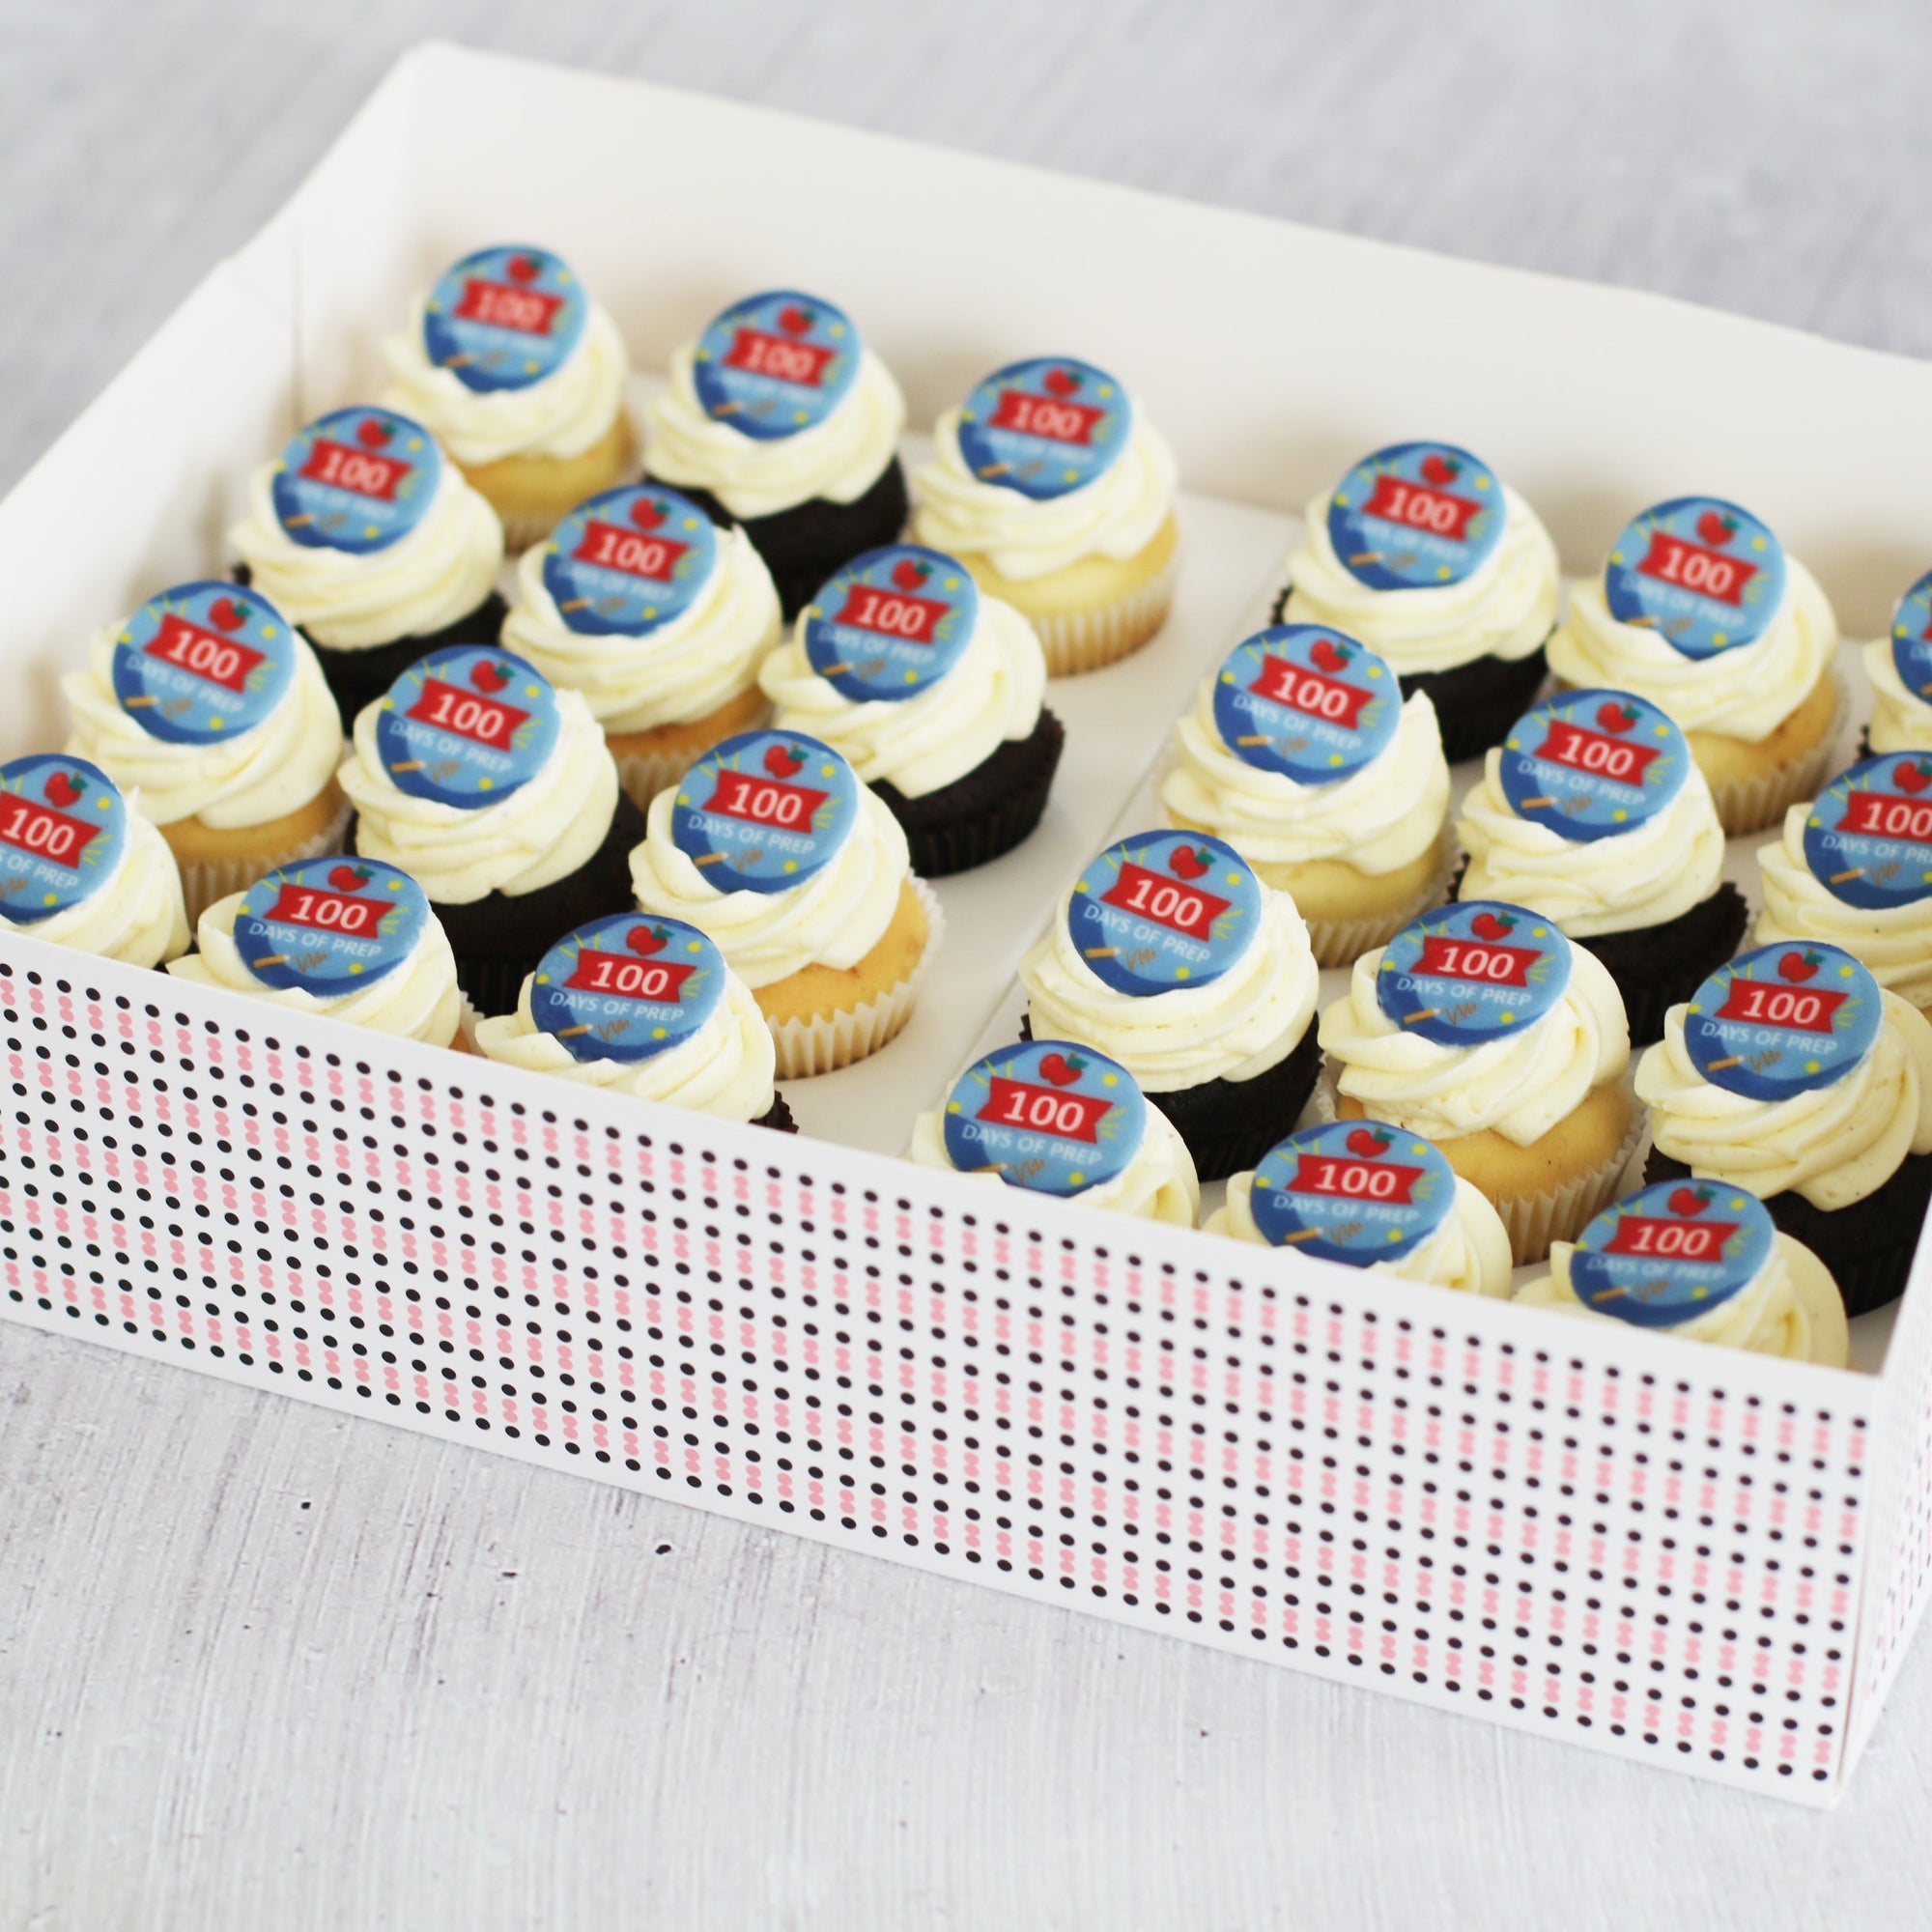 100 Days of Prep Mini box Cupcakes The Cupcake Queens 